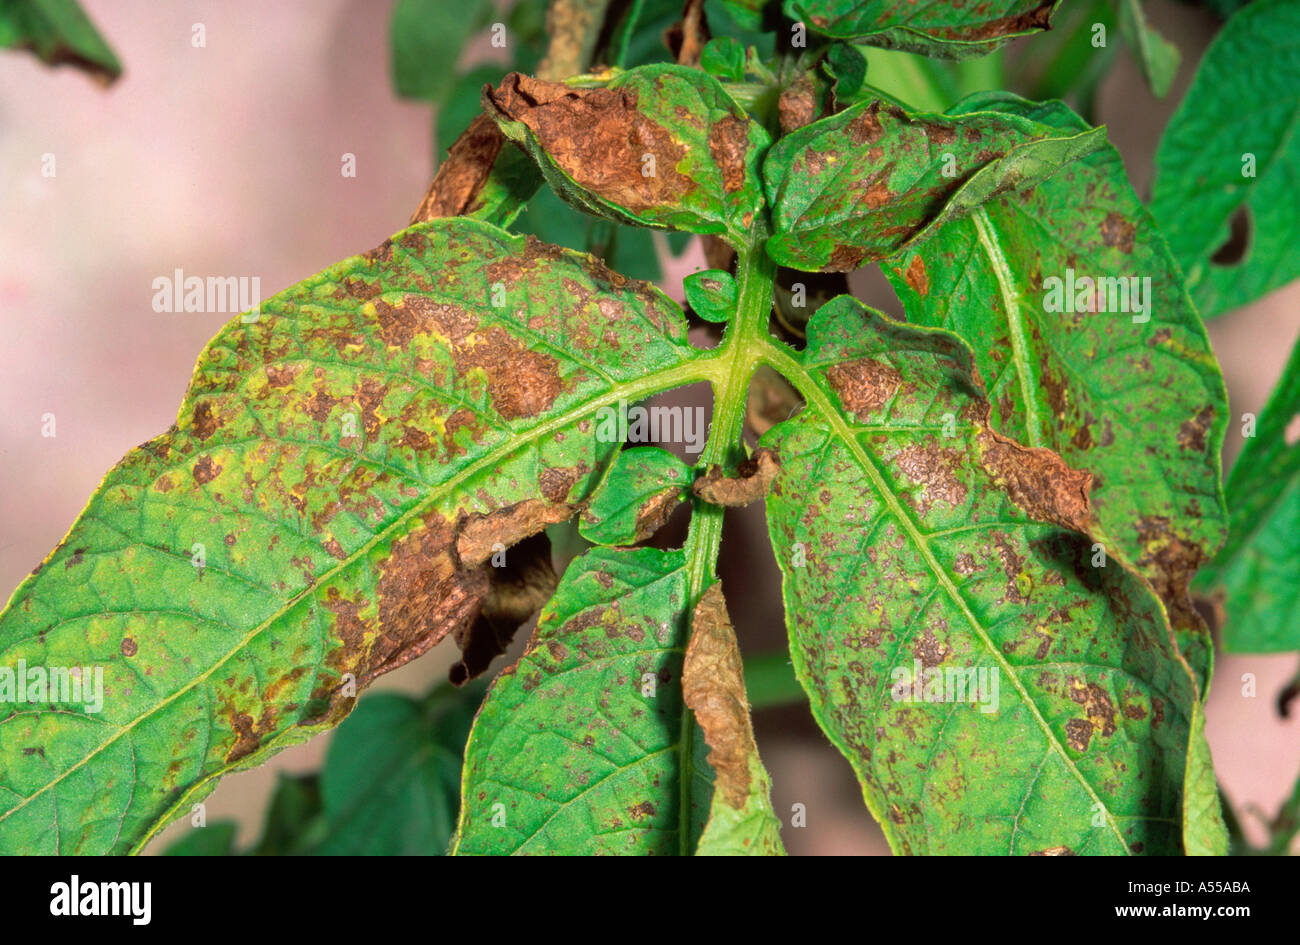 Tomato spotted wilt virus symptoms on potato leaves Stock Photo